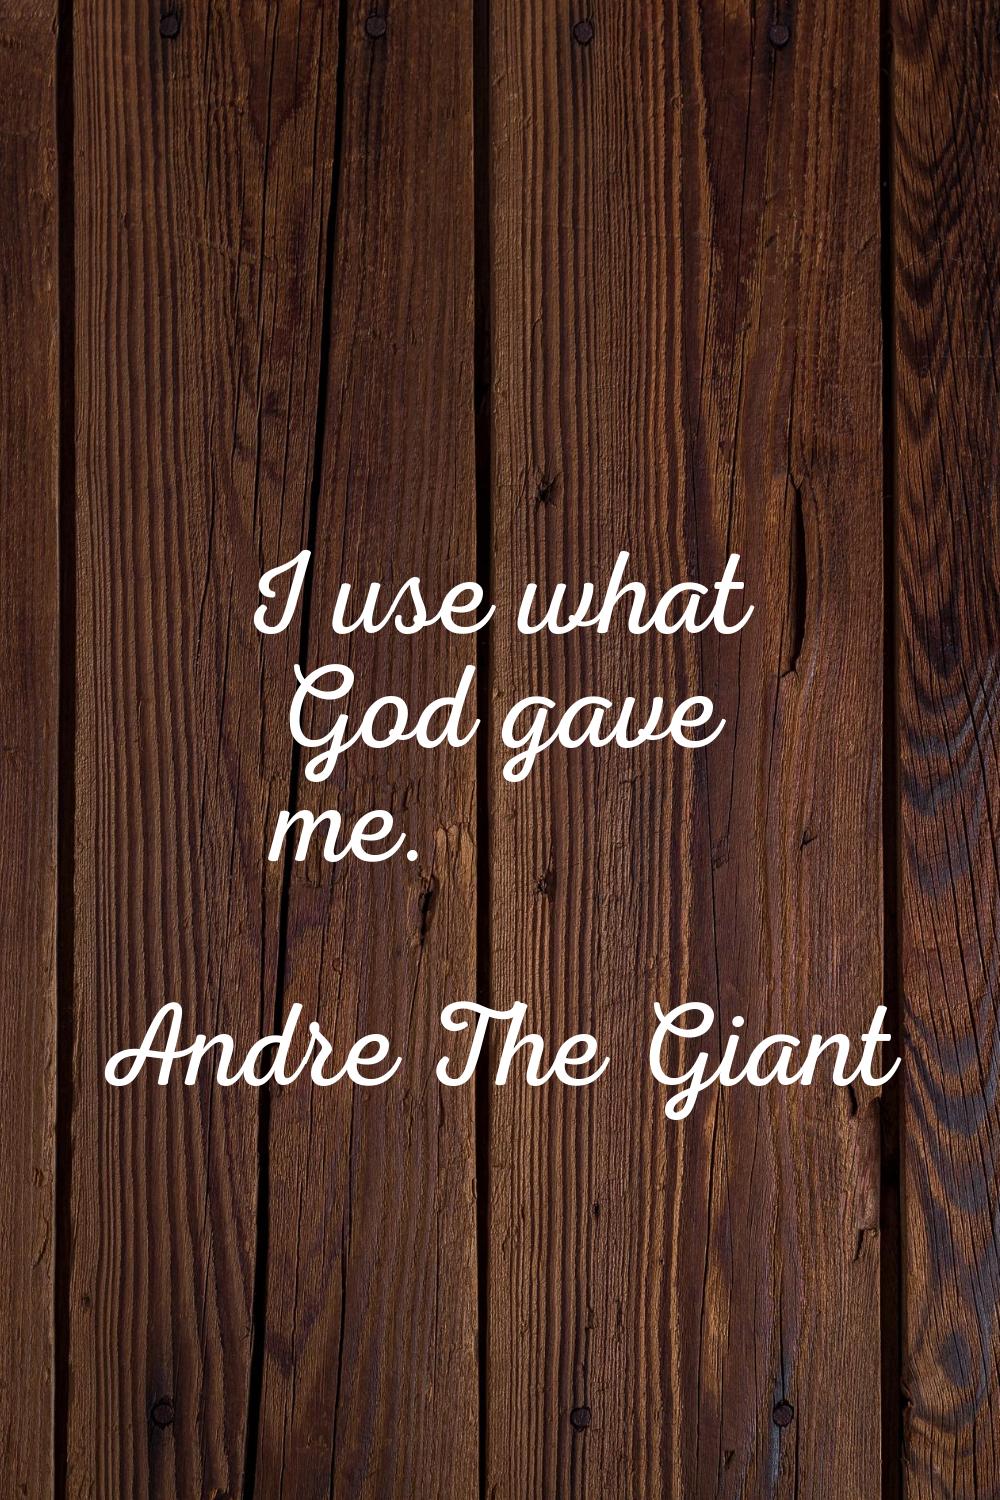 I use what God gave me.